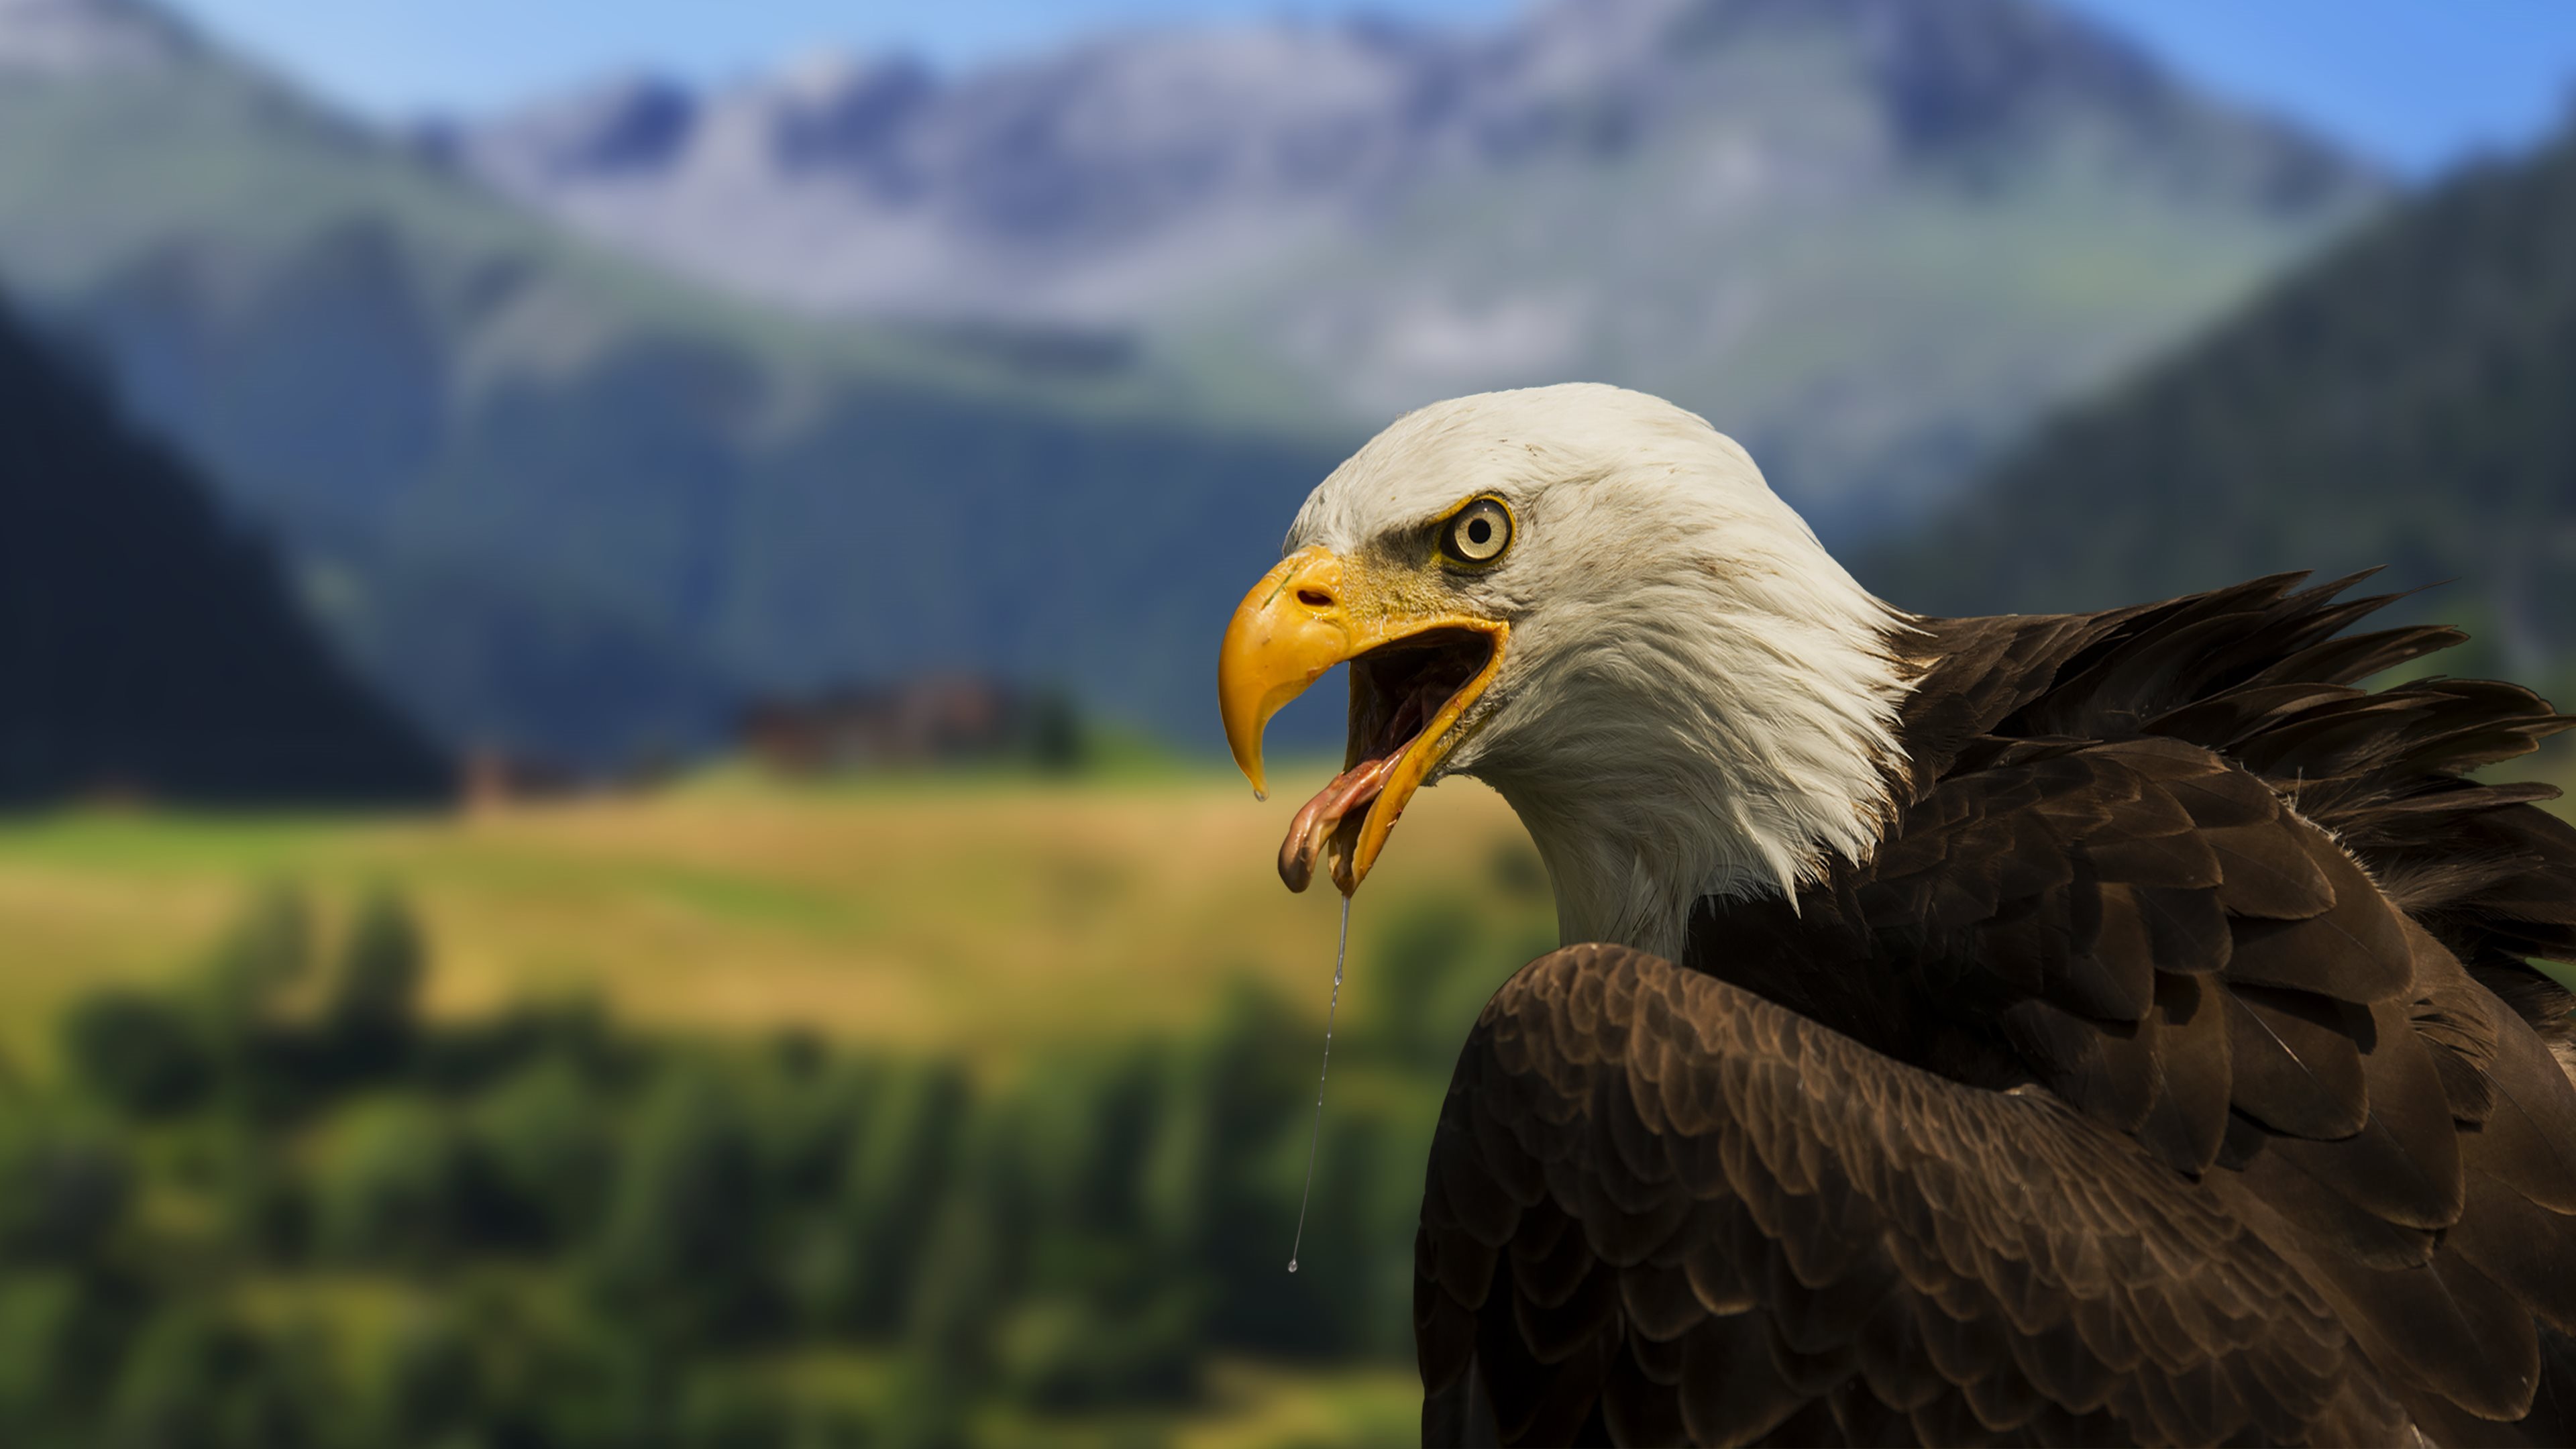  Bald Eagle 4K Wallpaper Full 1080p Ultra HD Wallpapers